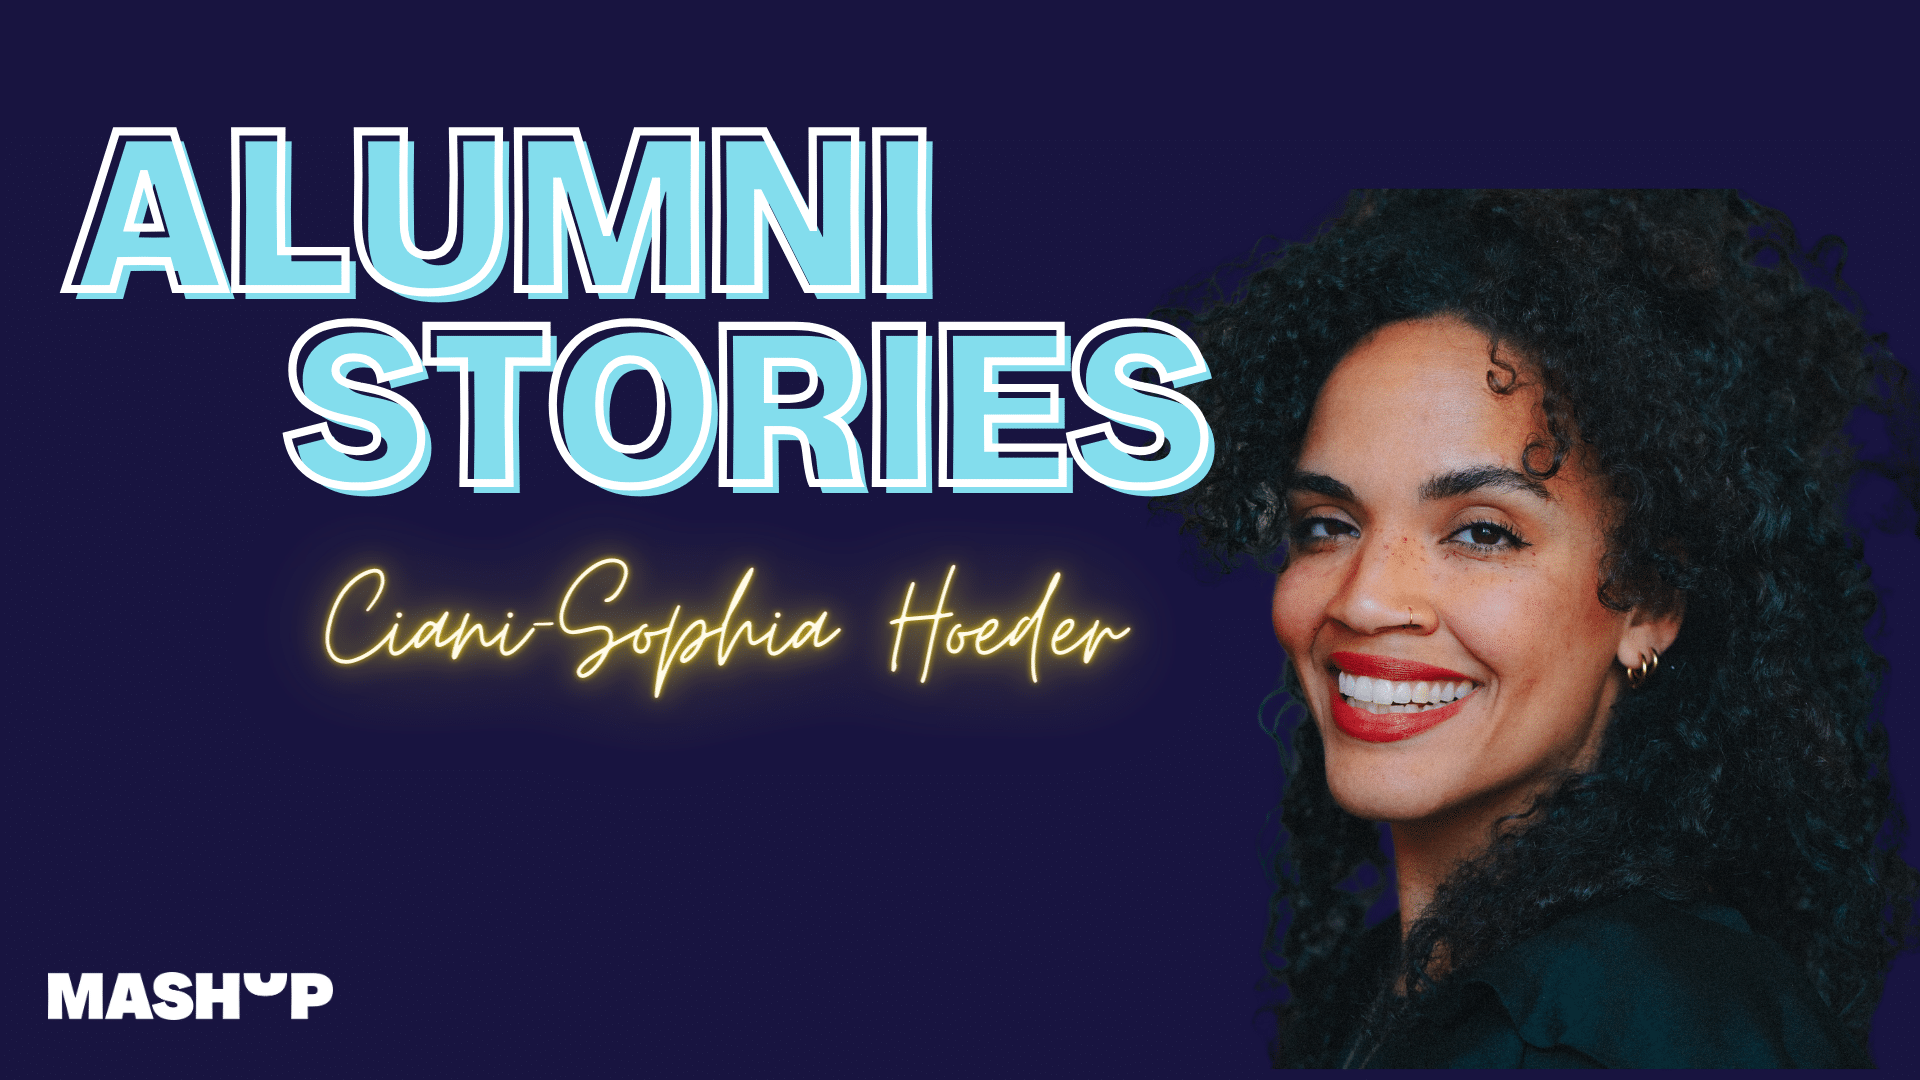 Alumni Stories – Ciani-Sophia Hoeder